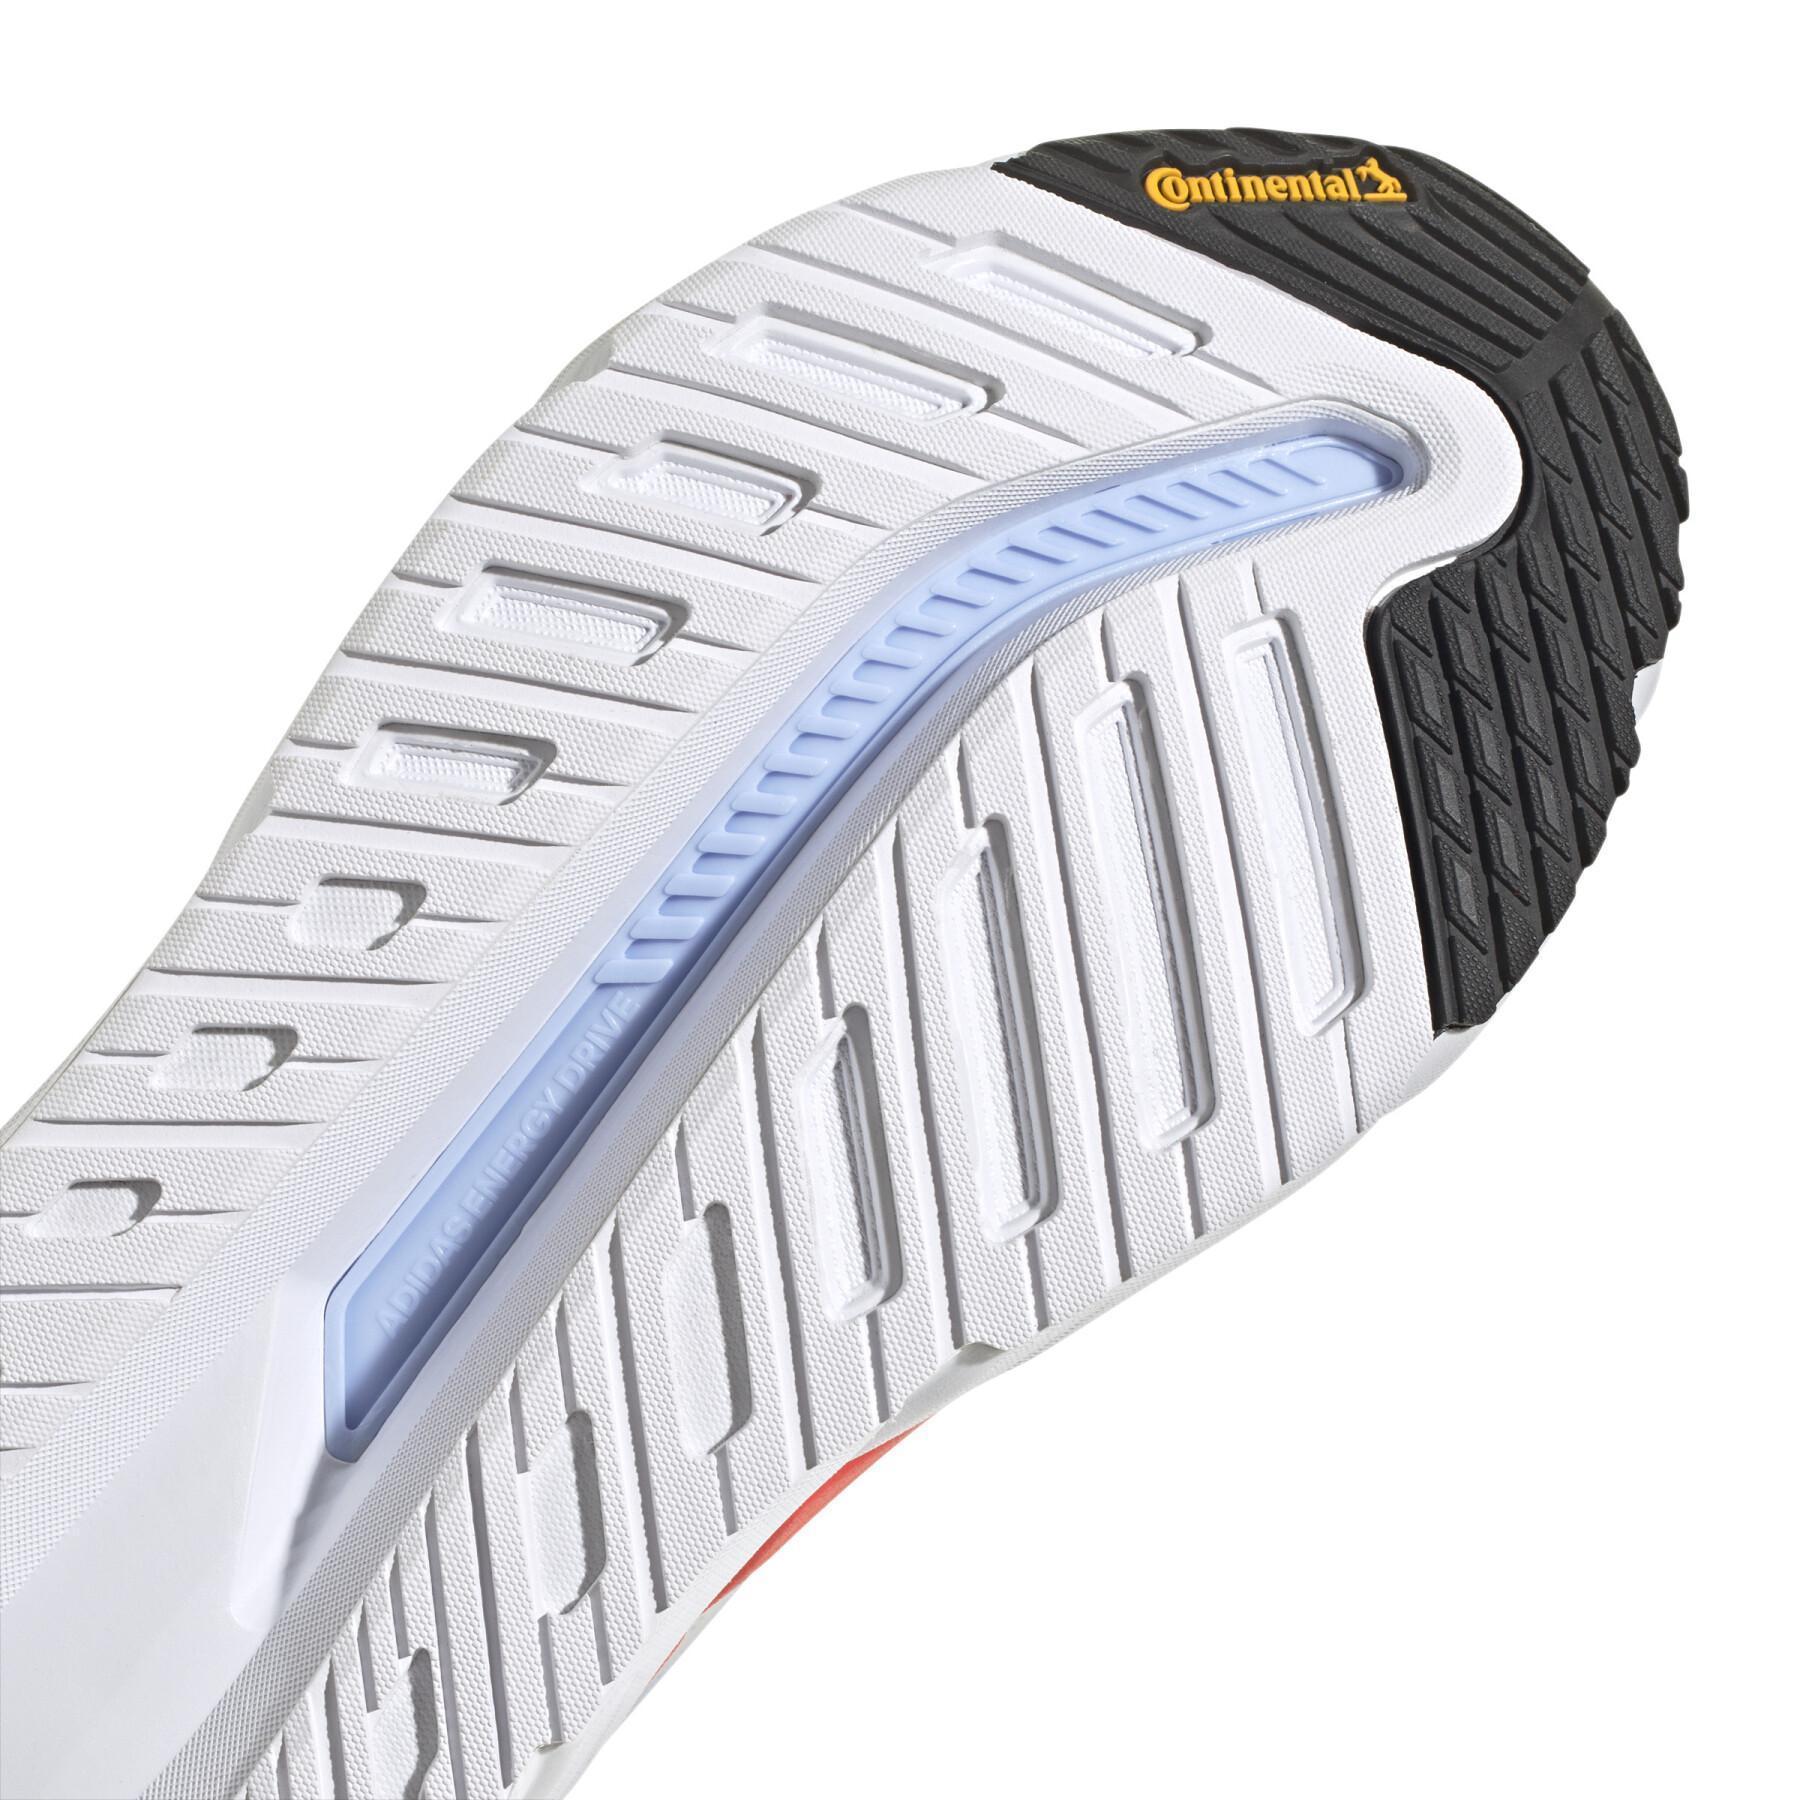 Schoenen van Running adidas Adistar CS